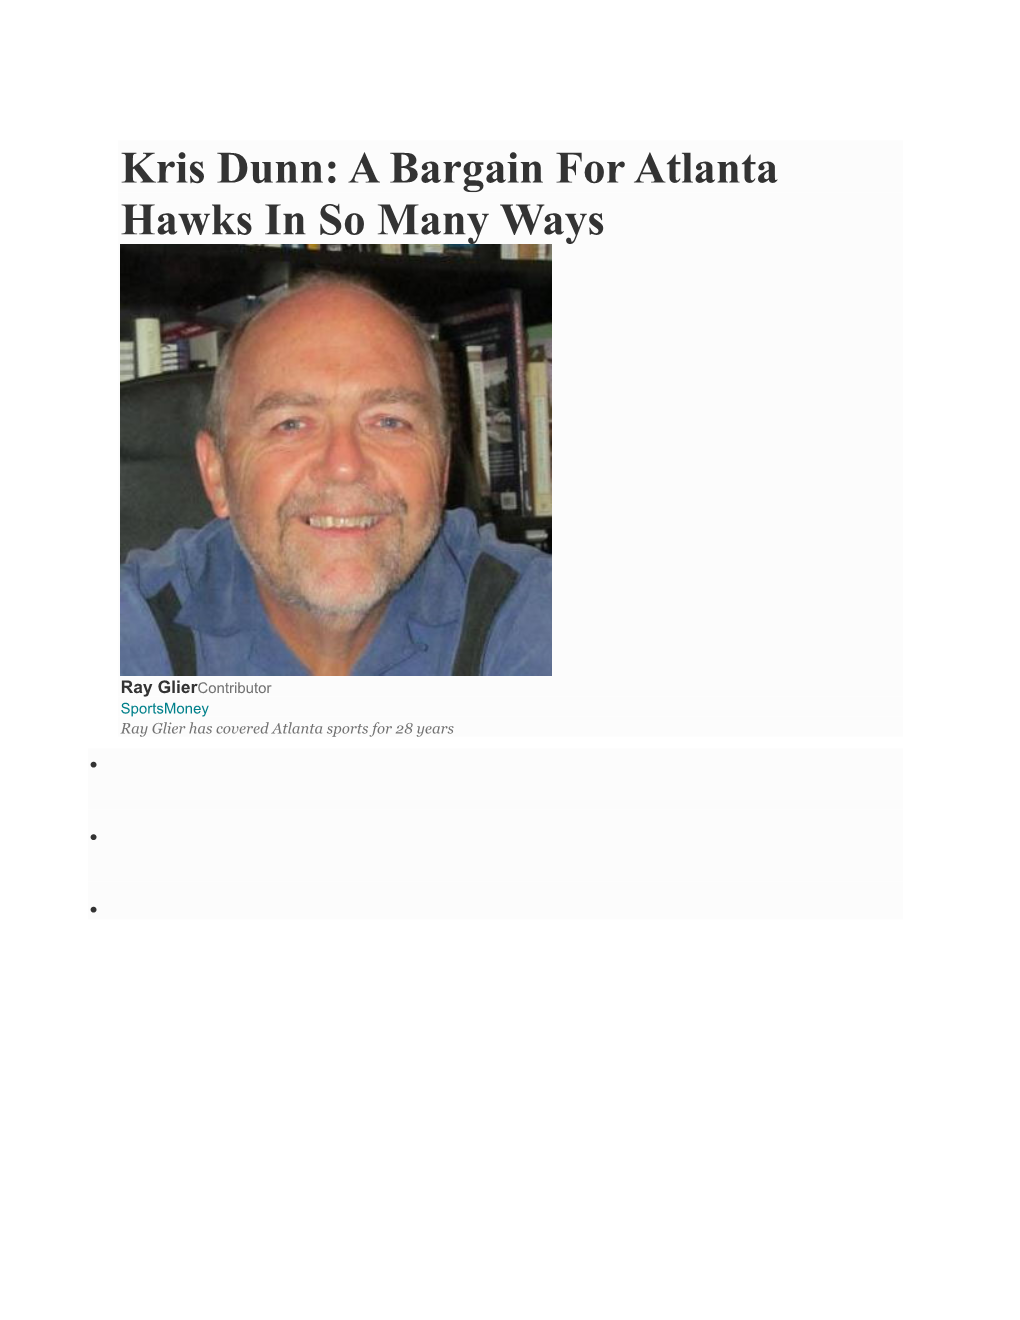 Kris Dunn: a Bargain for Atlanta Hawks in So Many Ways